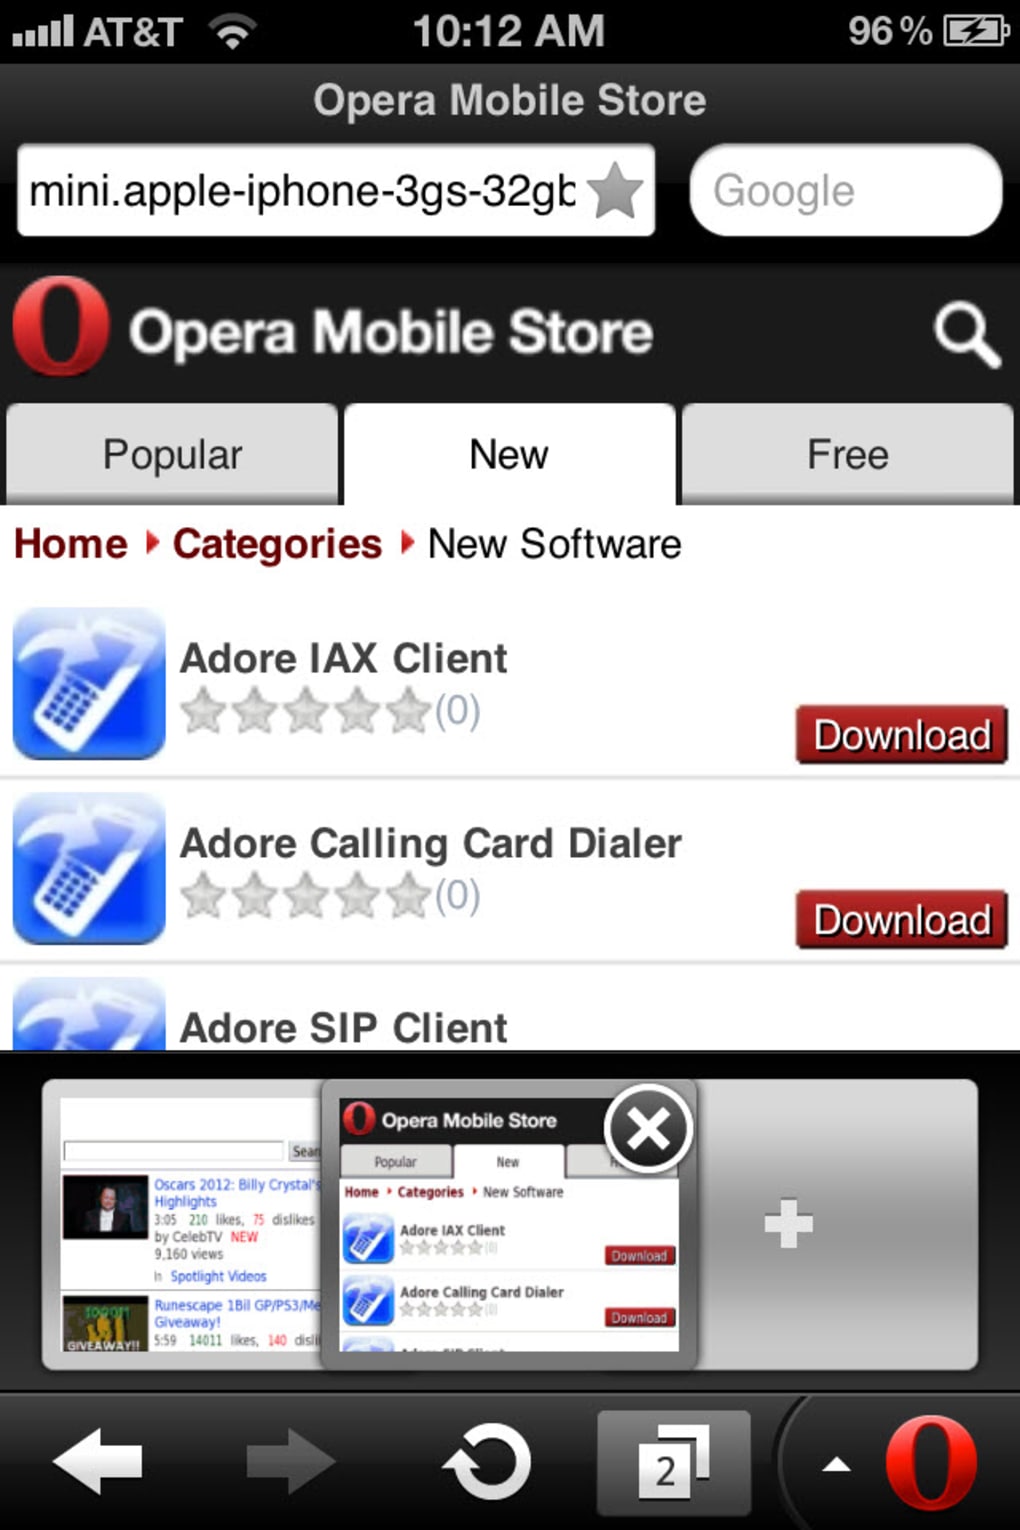 Opera Mini Old Version - Opera Mini For Android Apk ...